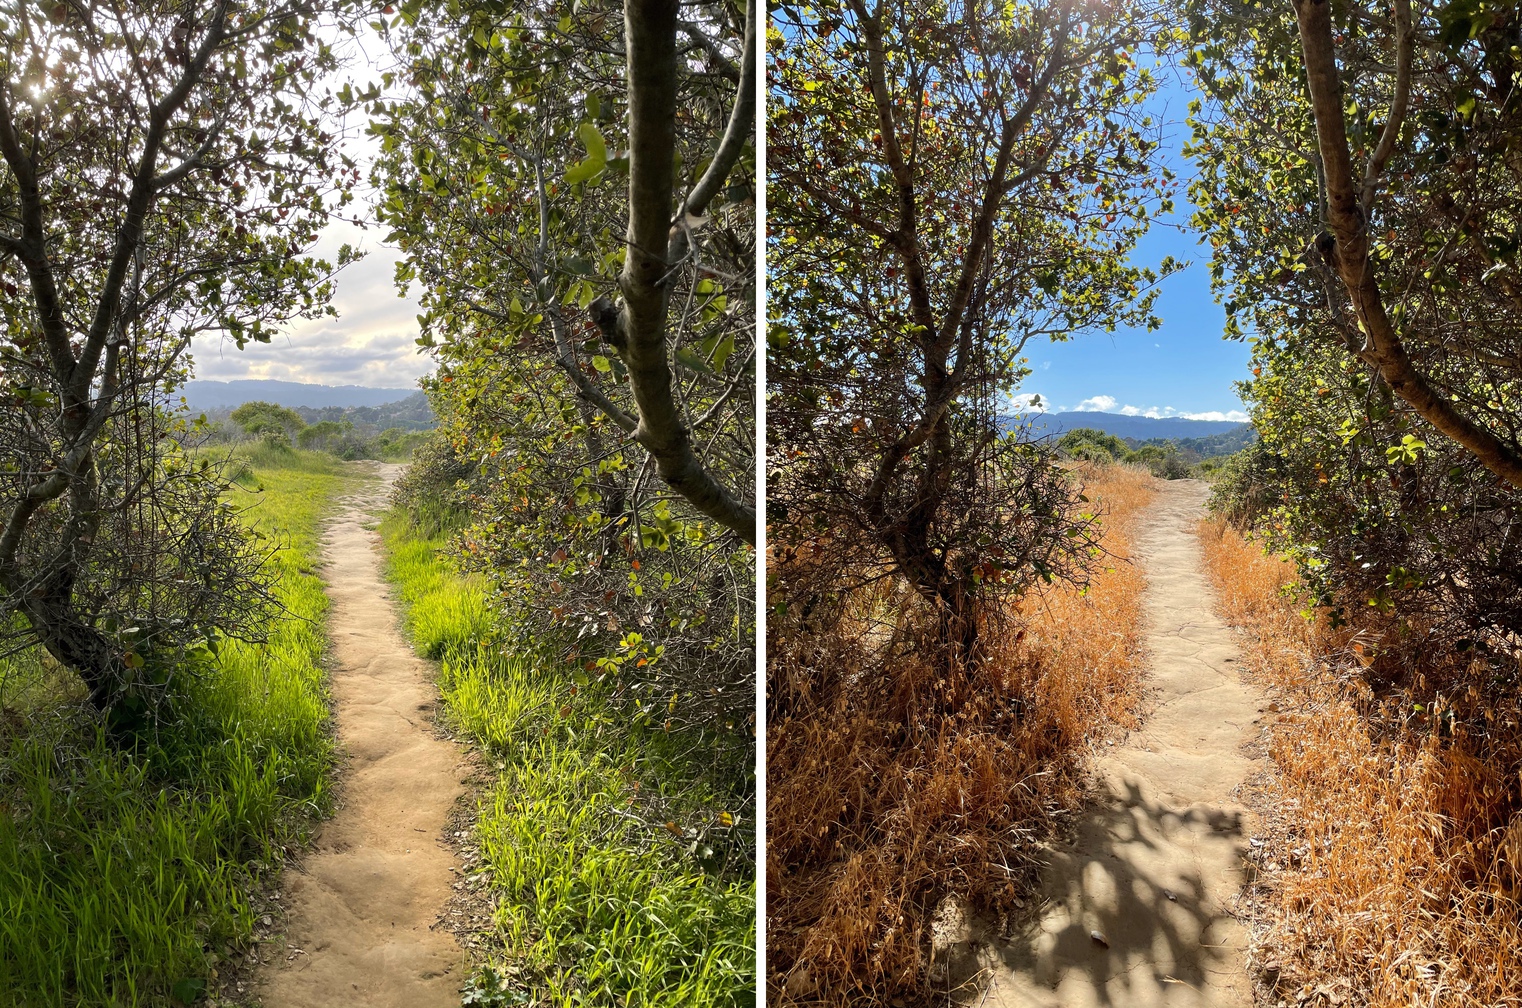 Sugarloaf Hill, San Mateo, CA. Left: April 2021, right: June 2021